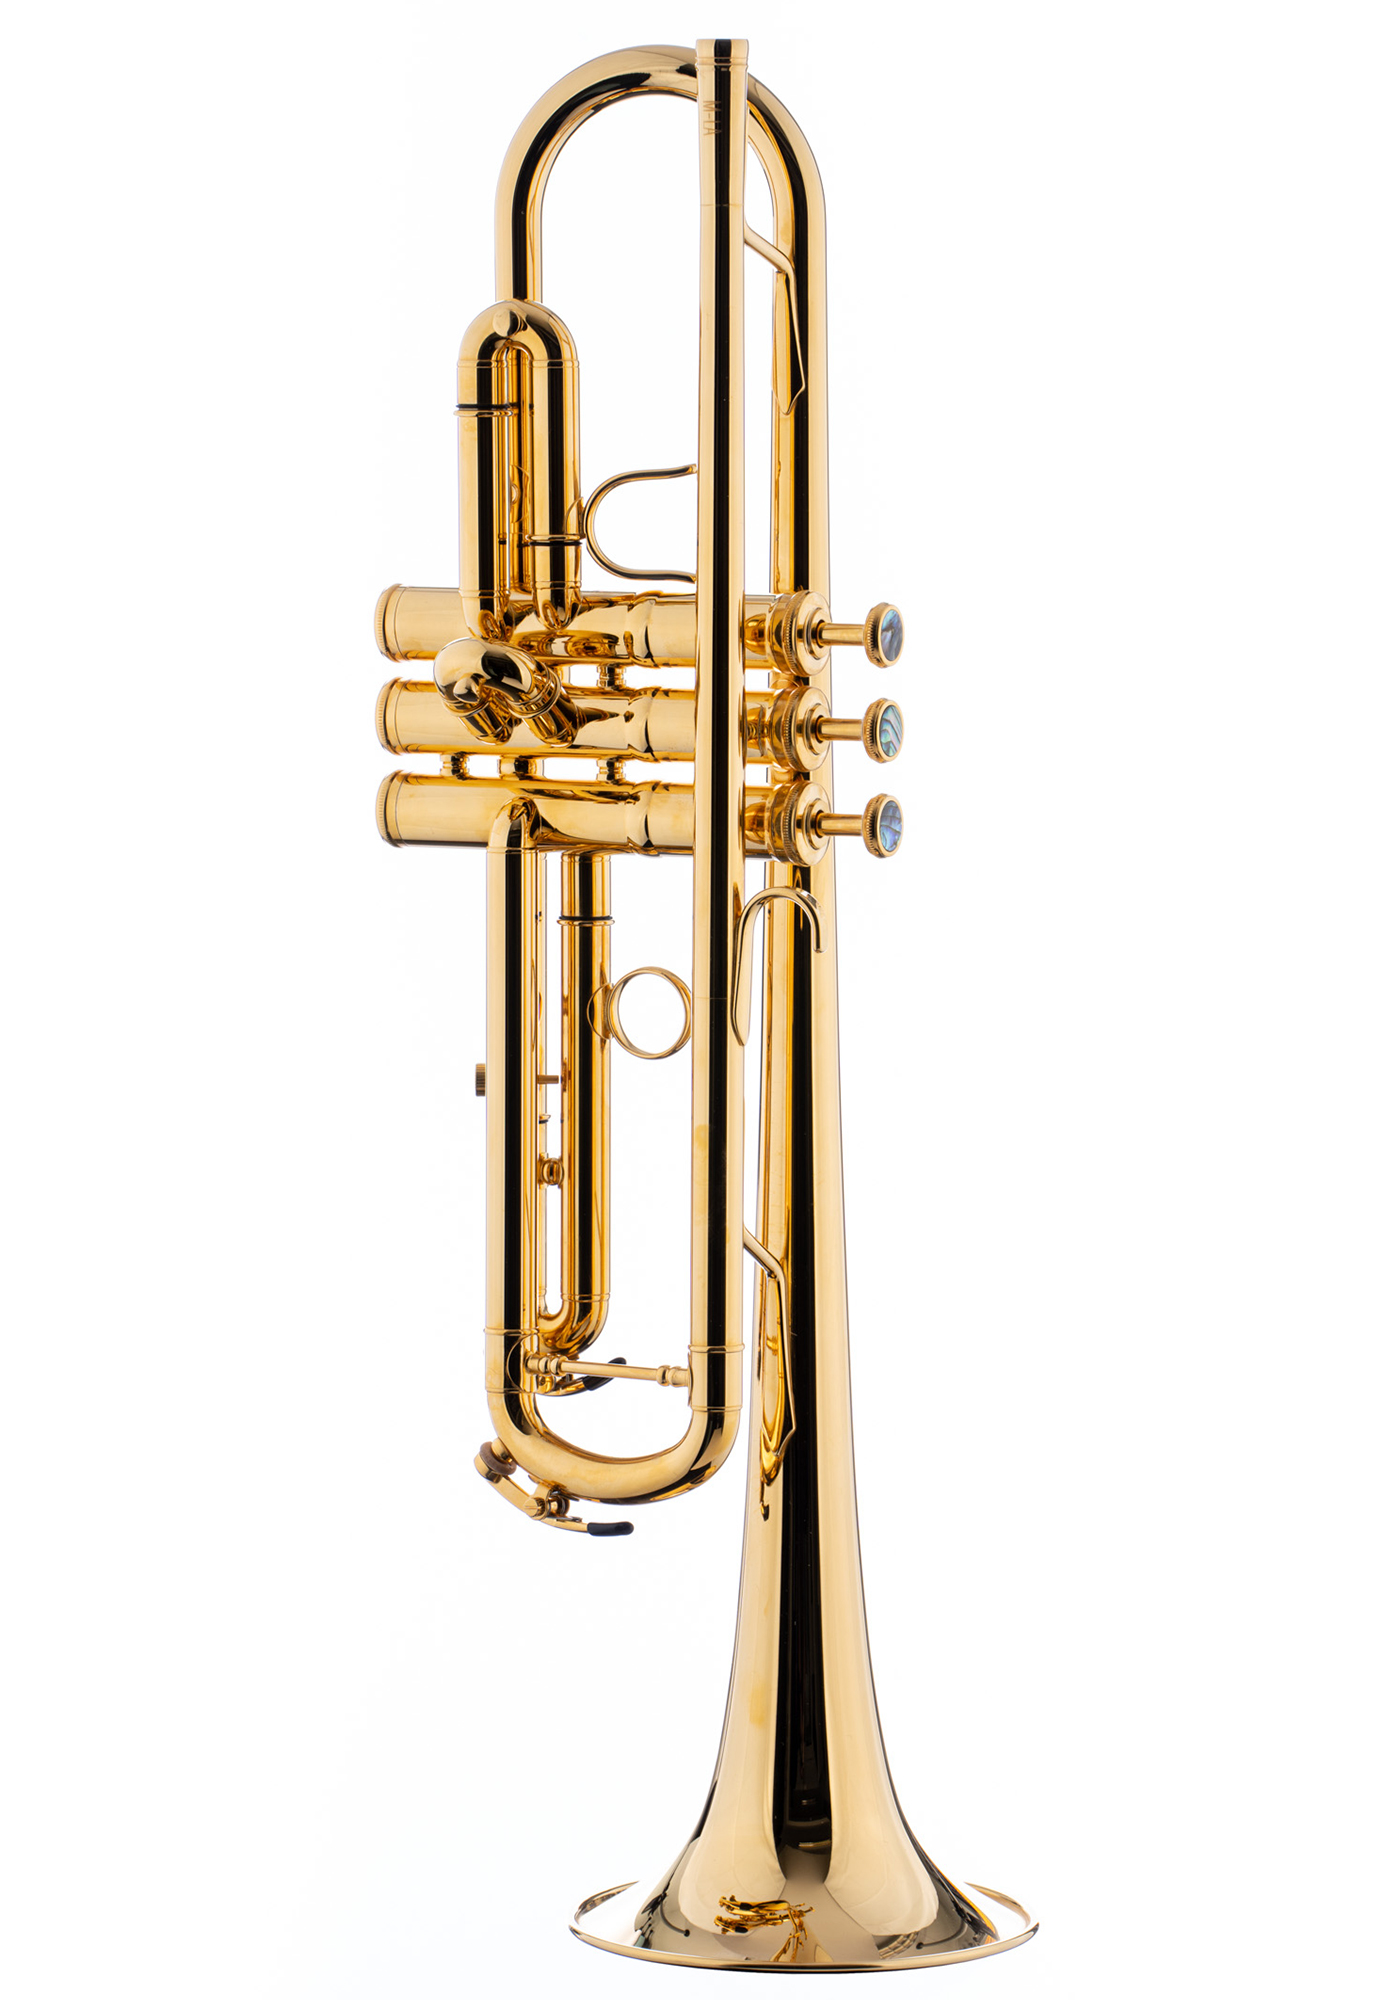 Schagerl Bb-Trumpet "1961" B2G gold plated